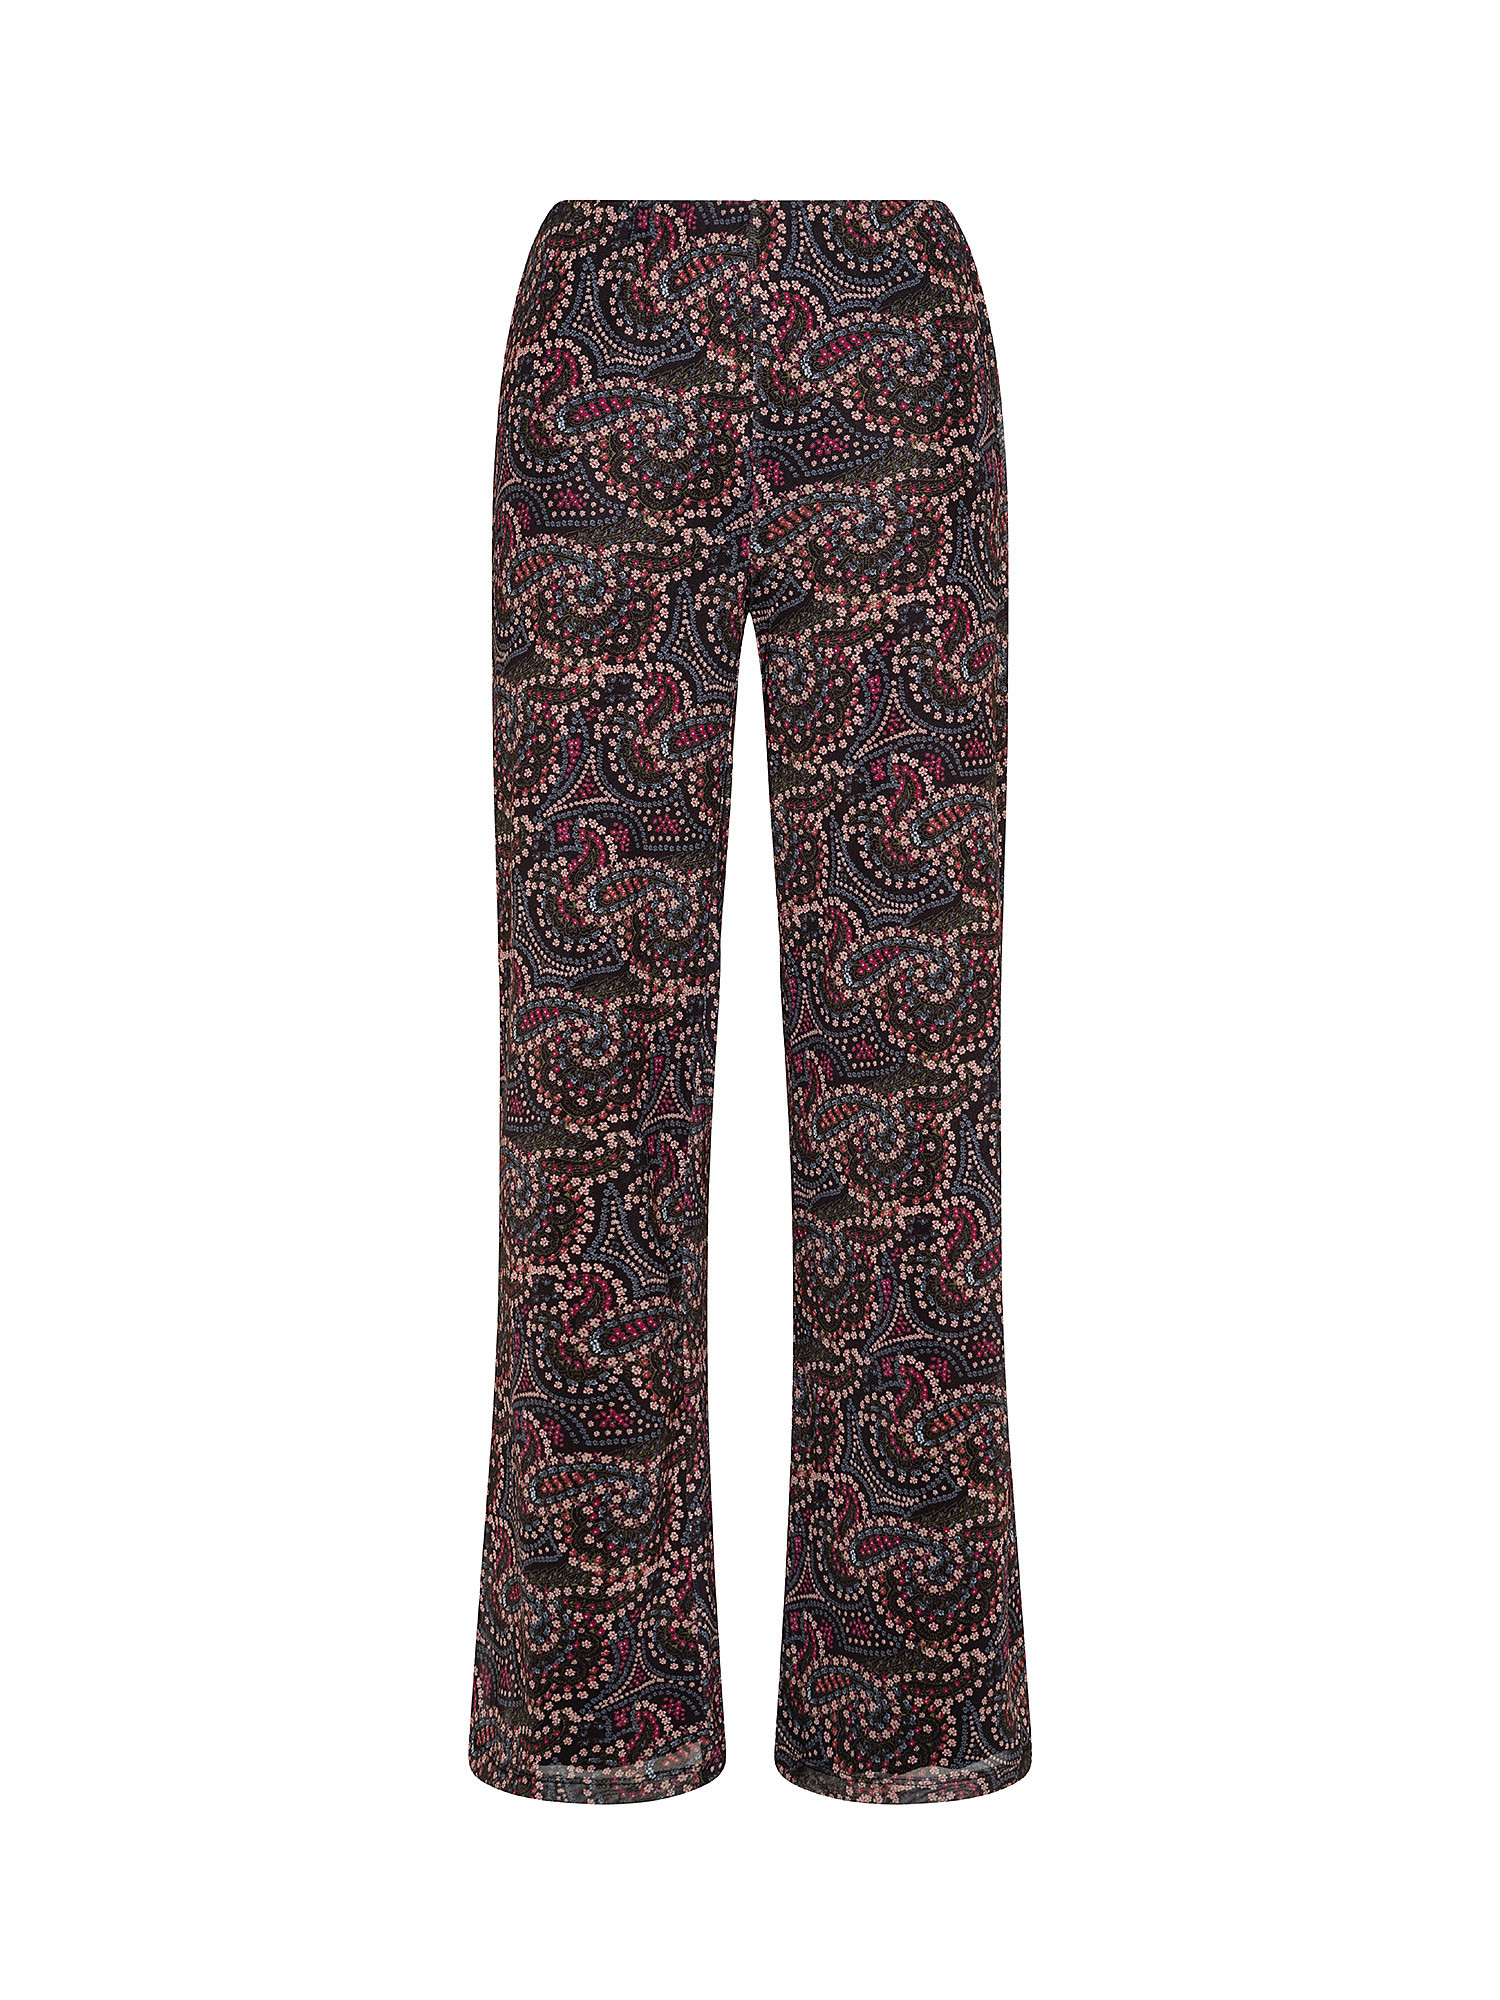 Сетчатые брюки Koan Knitwear, коричневый